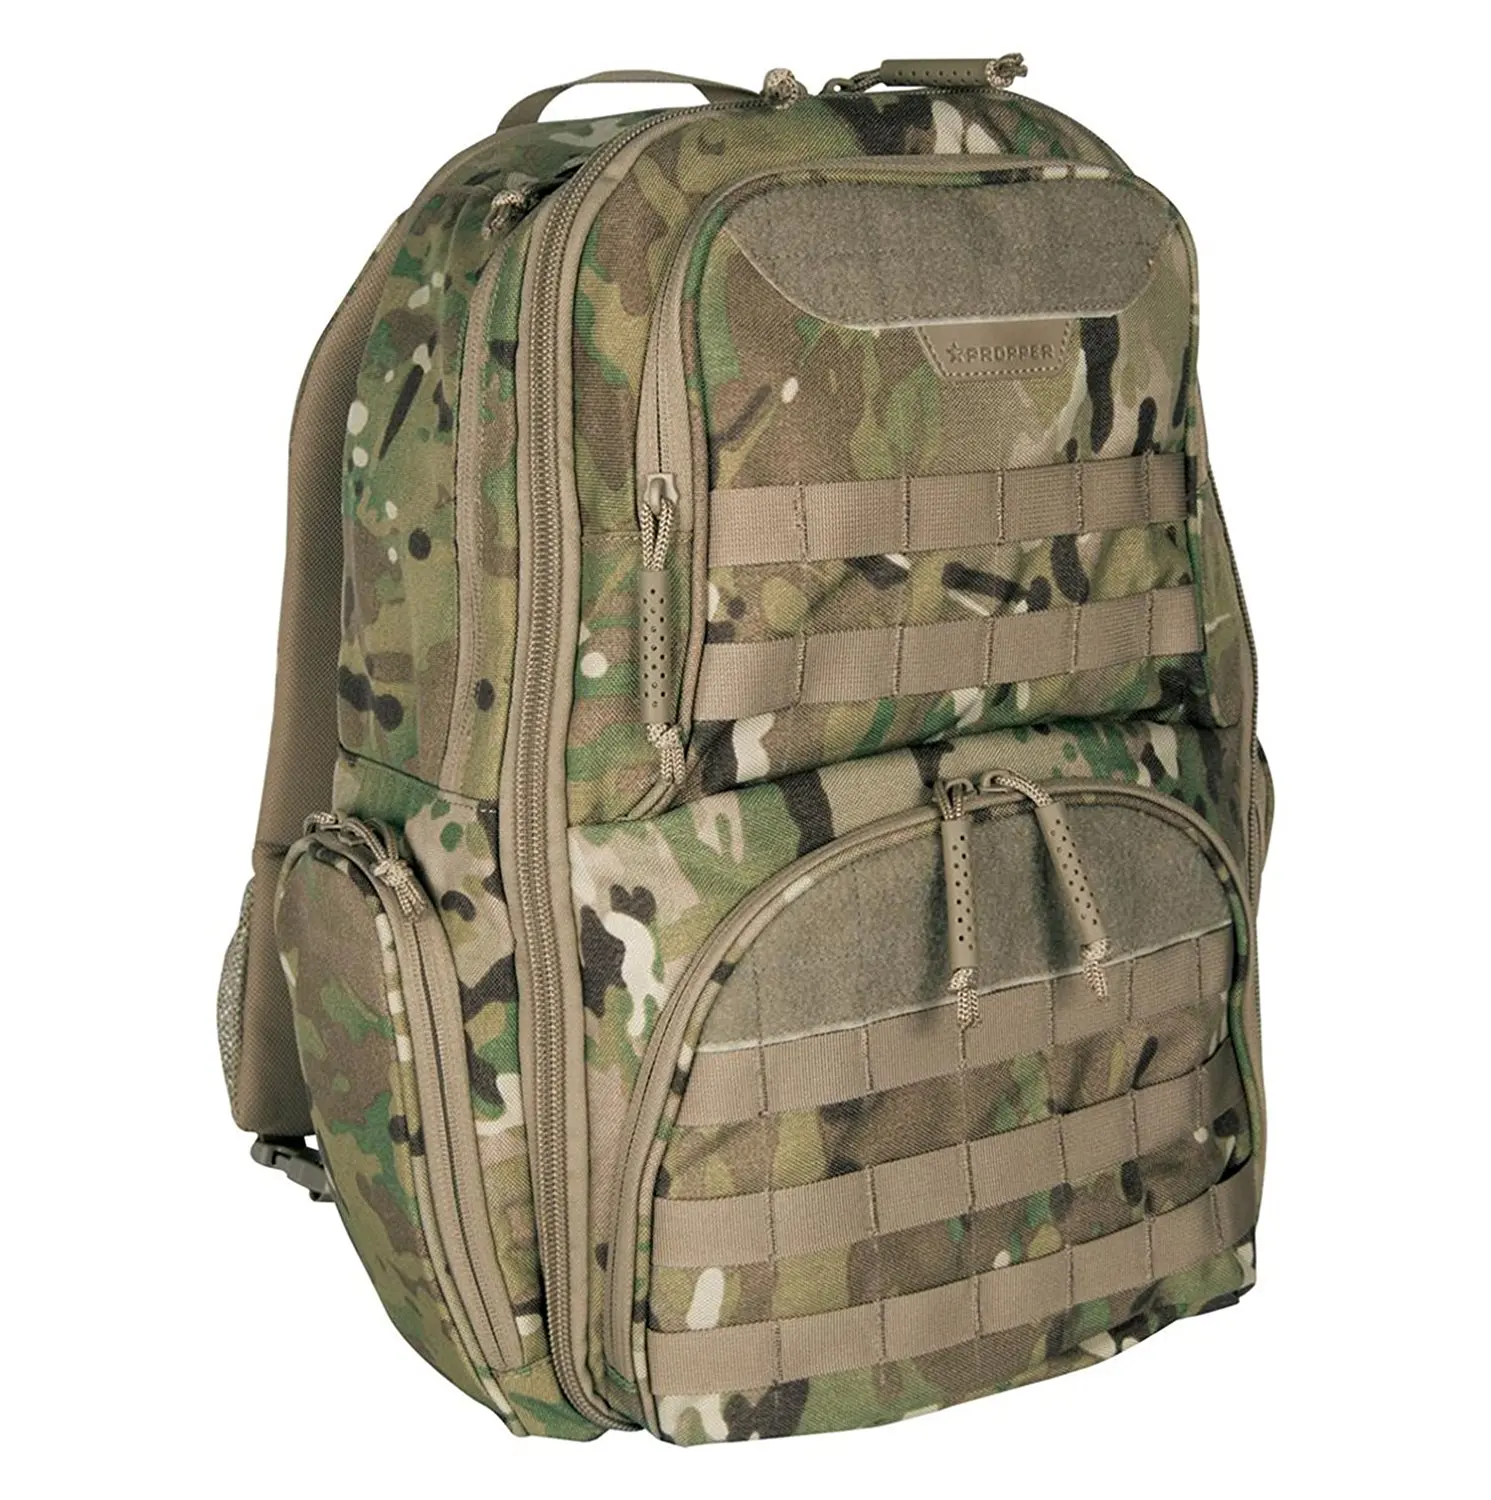 Cheap Multicam Backpack Cheap, find Multicam Backpack Cheap deals on ...